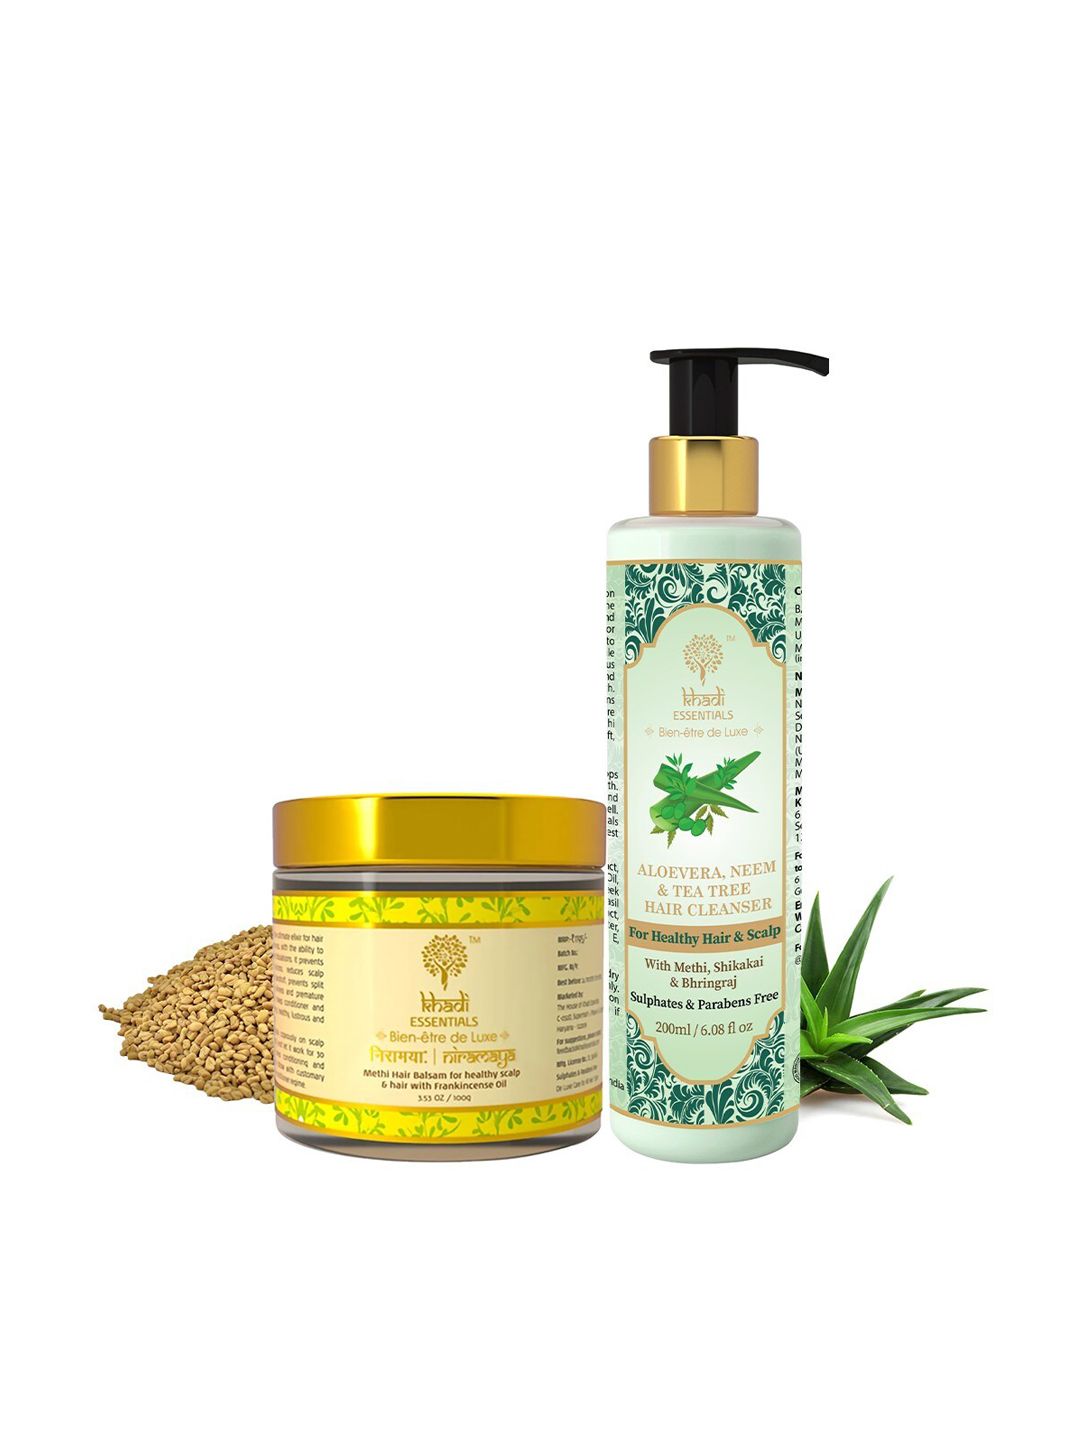 Khadi Essentials Methi, Tea Tree Shampoo & Methi Hair Mask for Anti Dandruff & Hair Growth Price in India